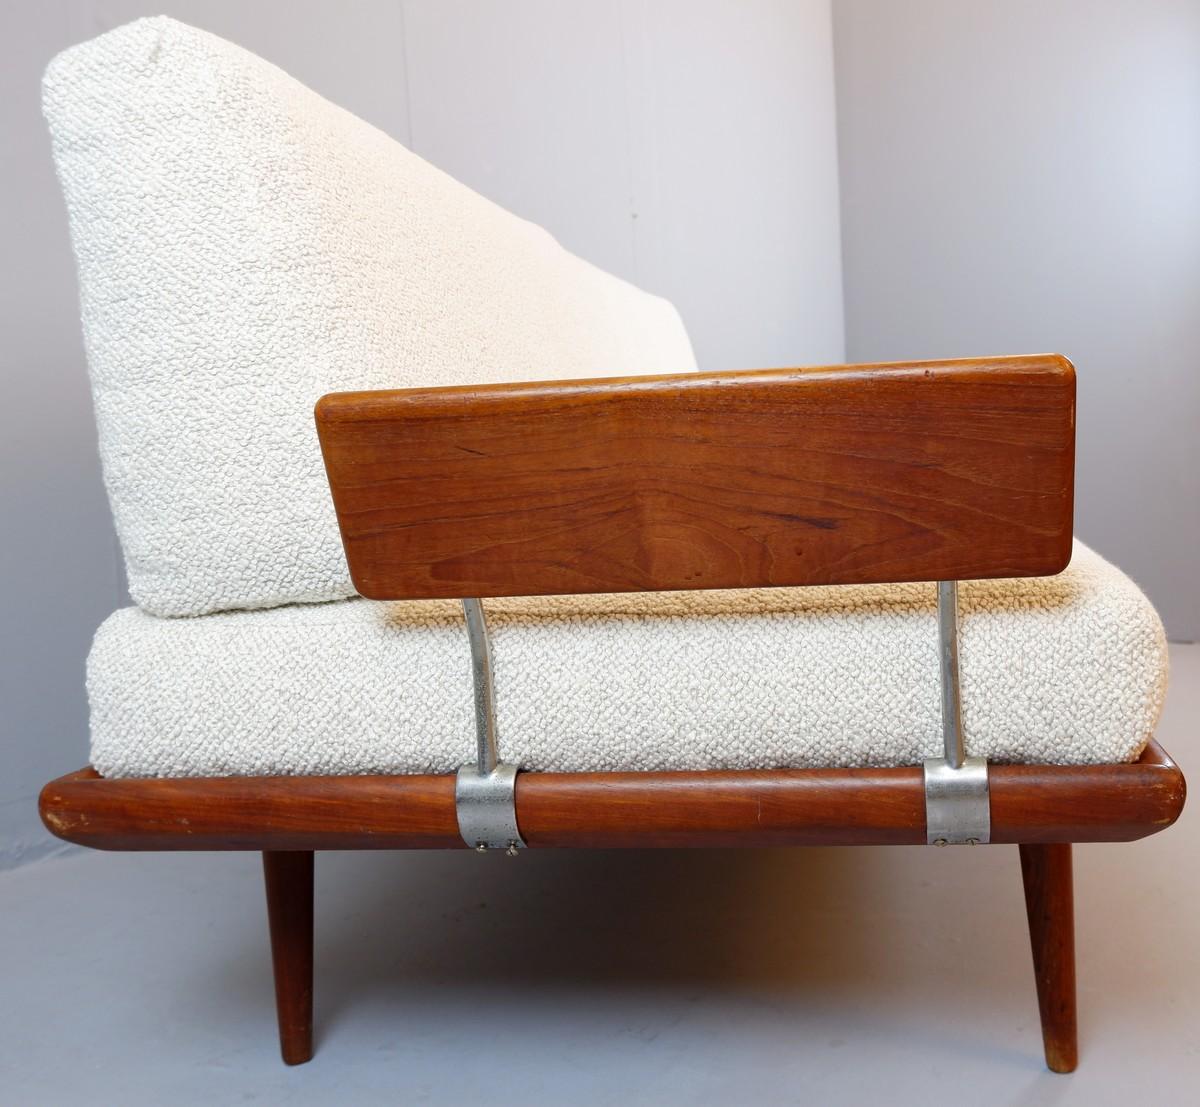 Daybed/sofa model FD 417 'Minerva' by Peter Hvidt, Denmark 1950s - New upholstery.